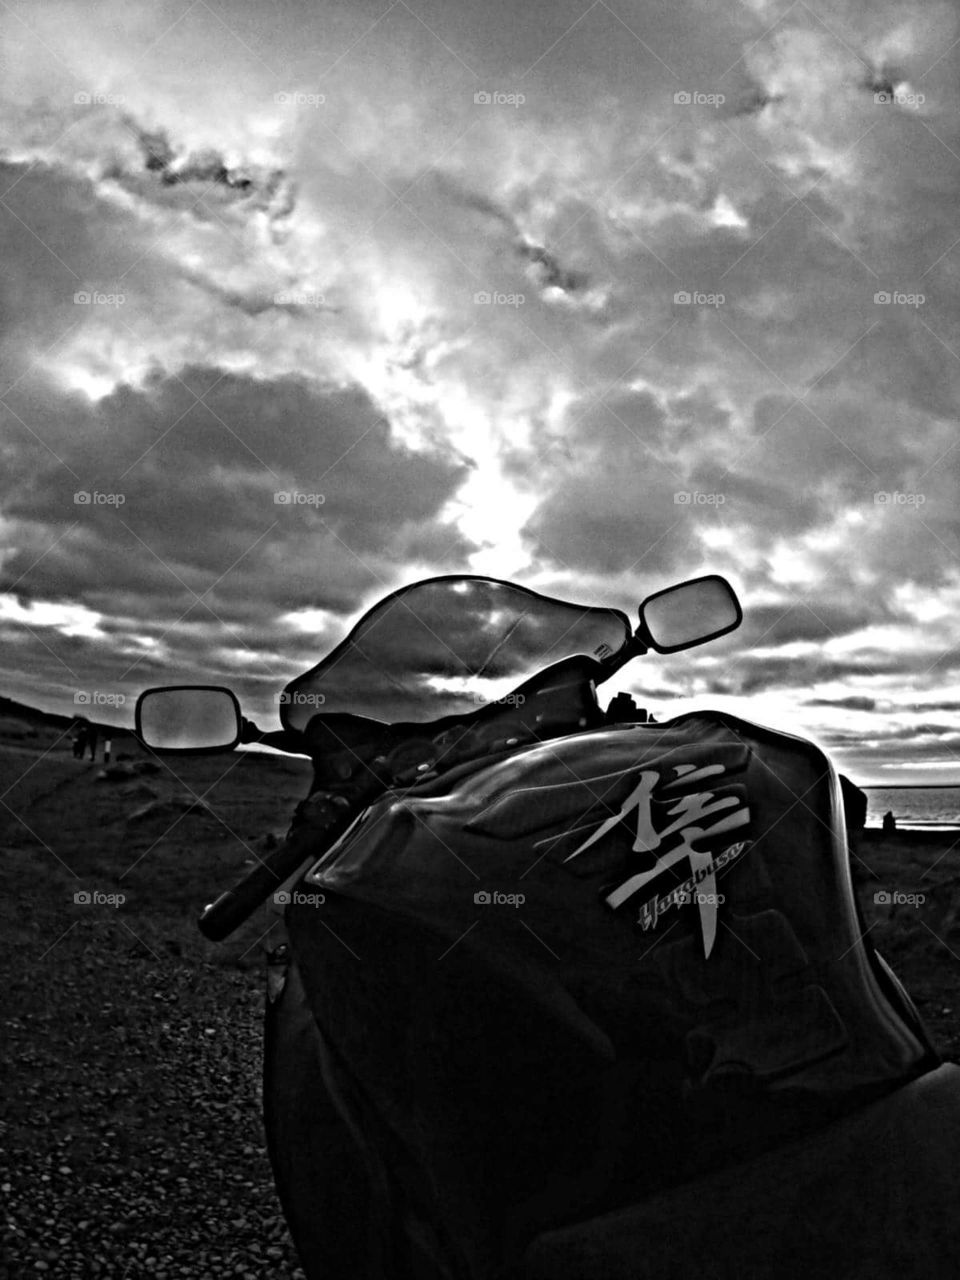 Motorcycle on beach at dusk